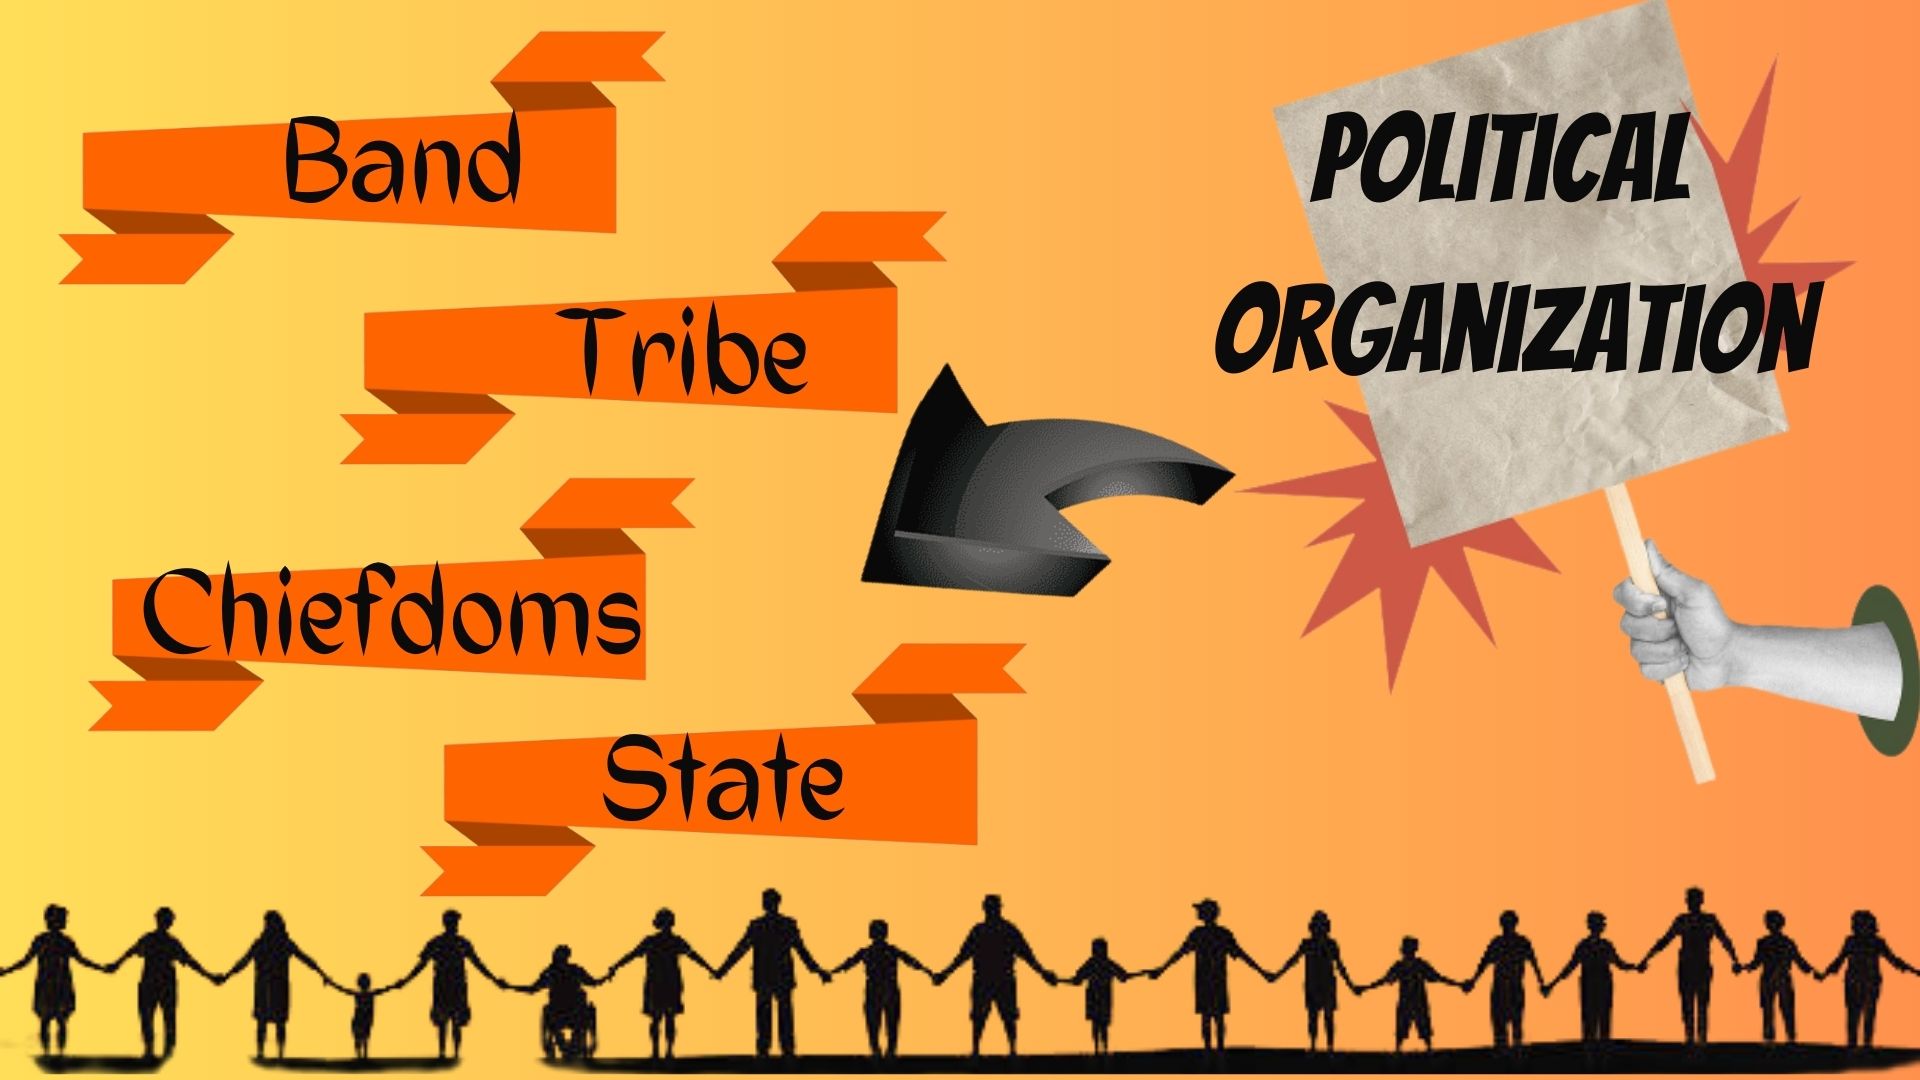 Anthropology of Political Organization